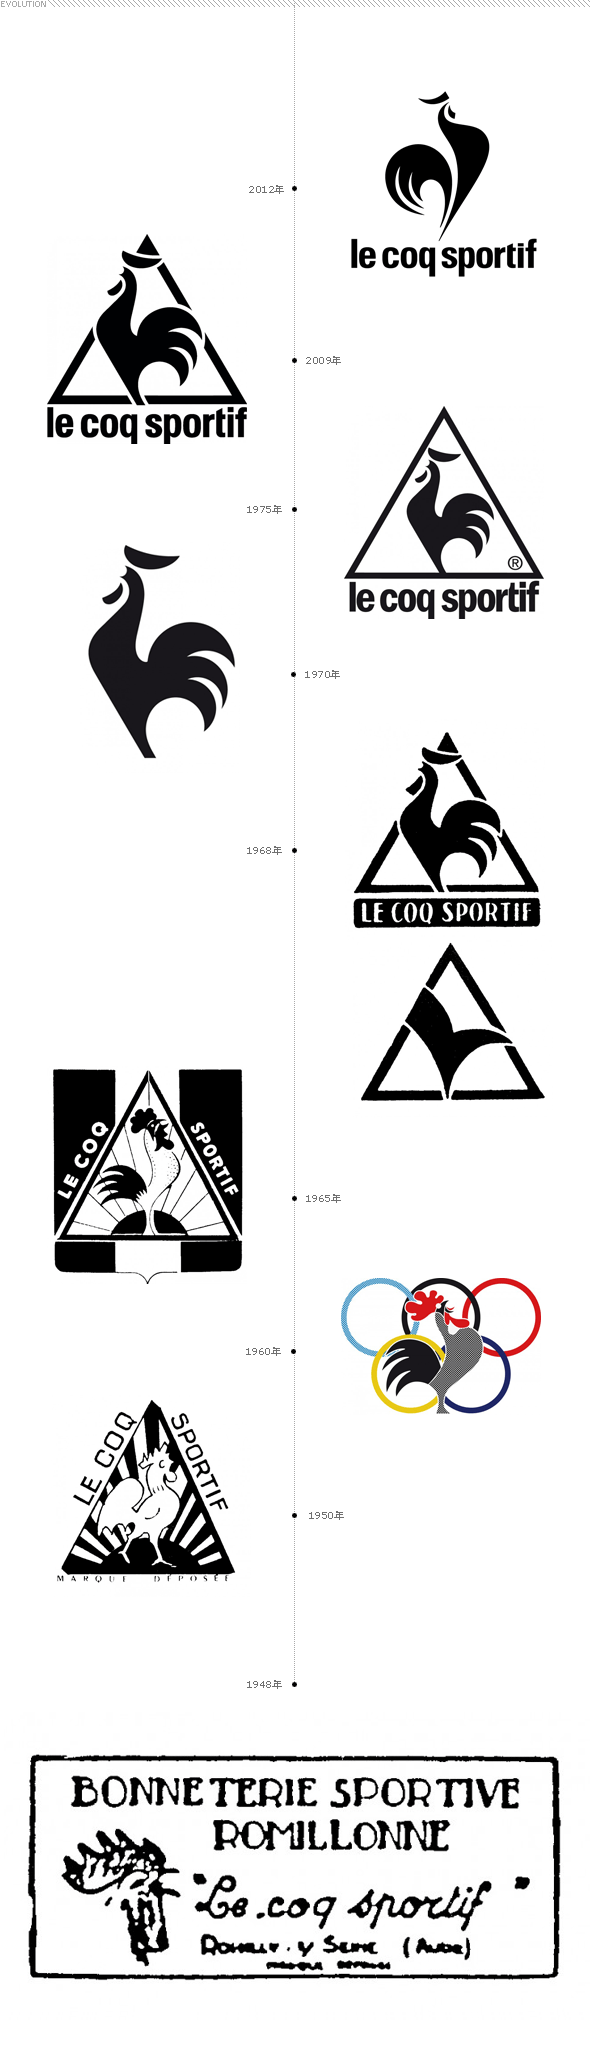 Le Coq Sportif Logo - Le Coq Sportif New Look. #corporate #branding #creative #logo